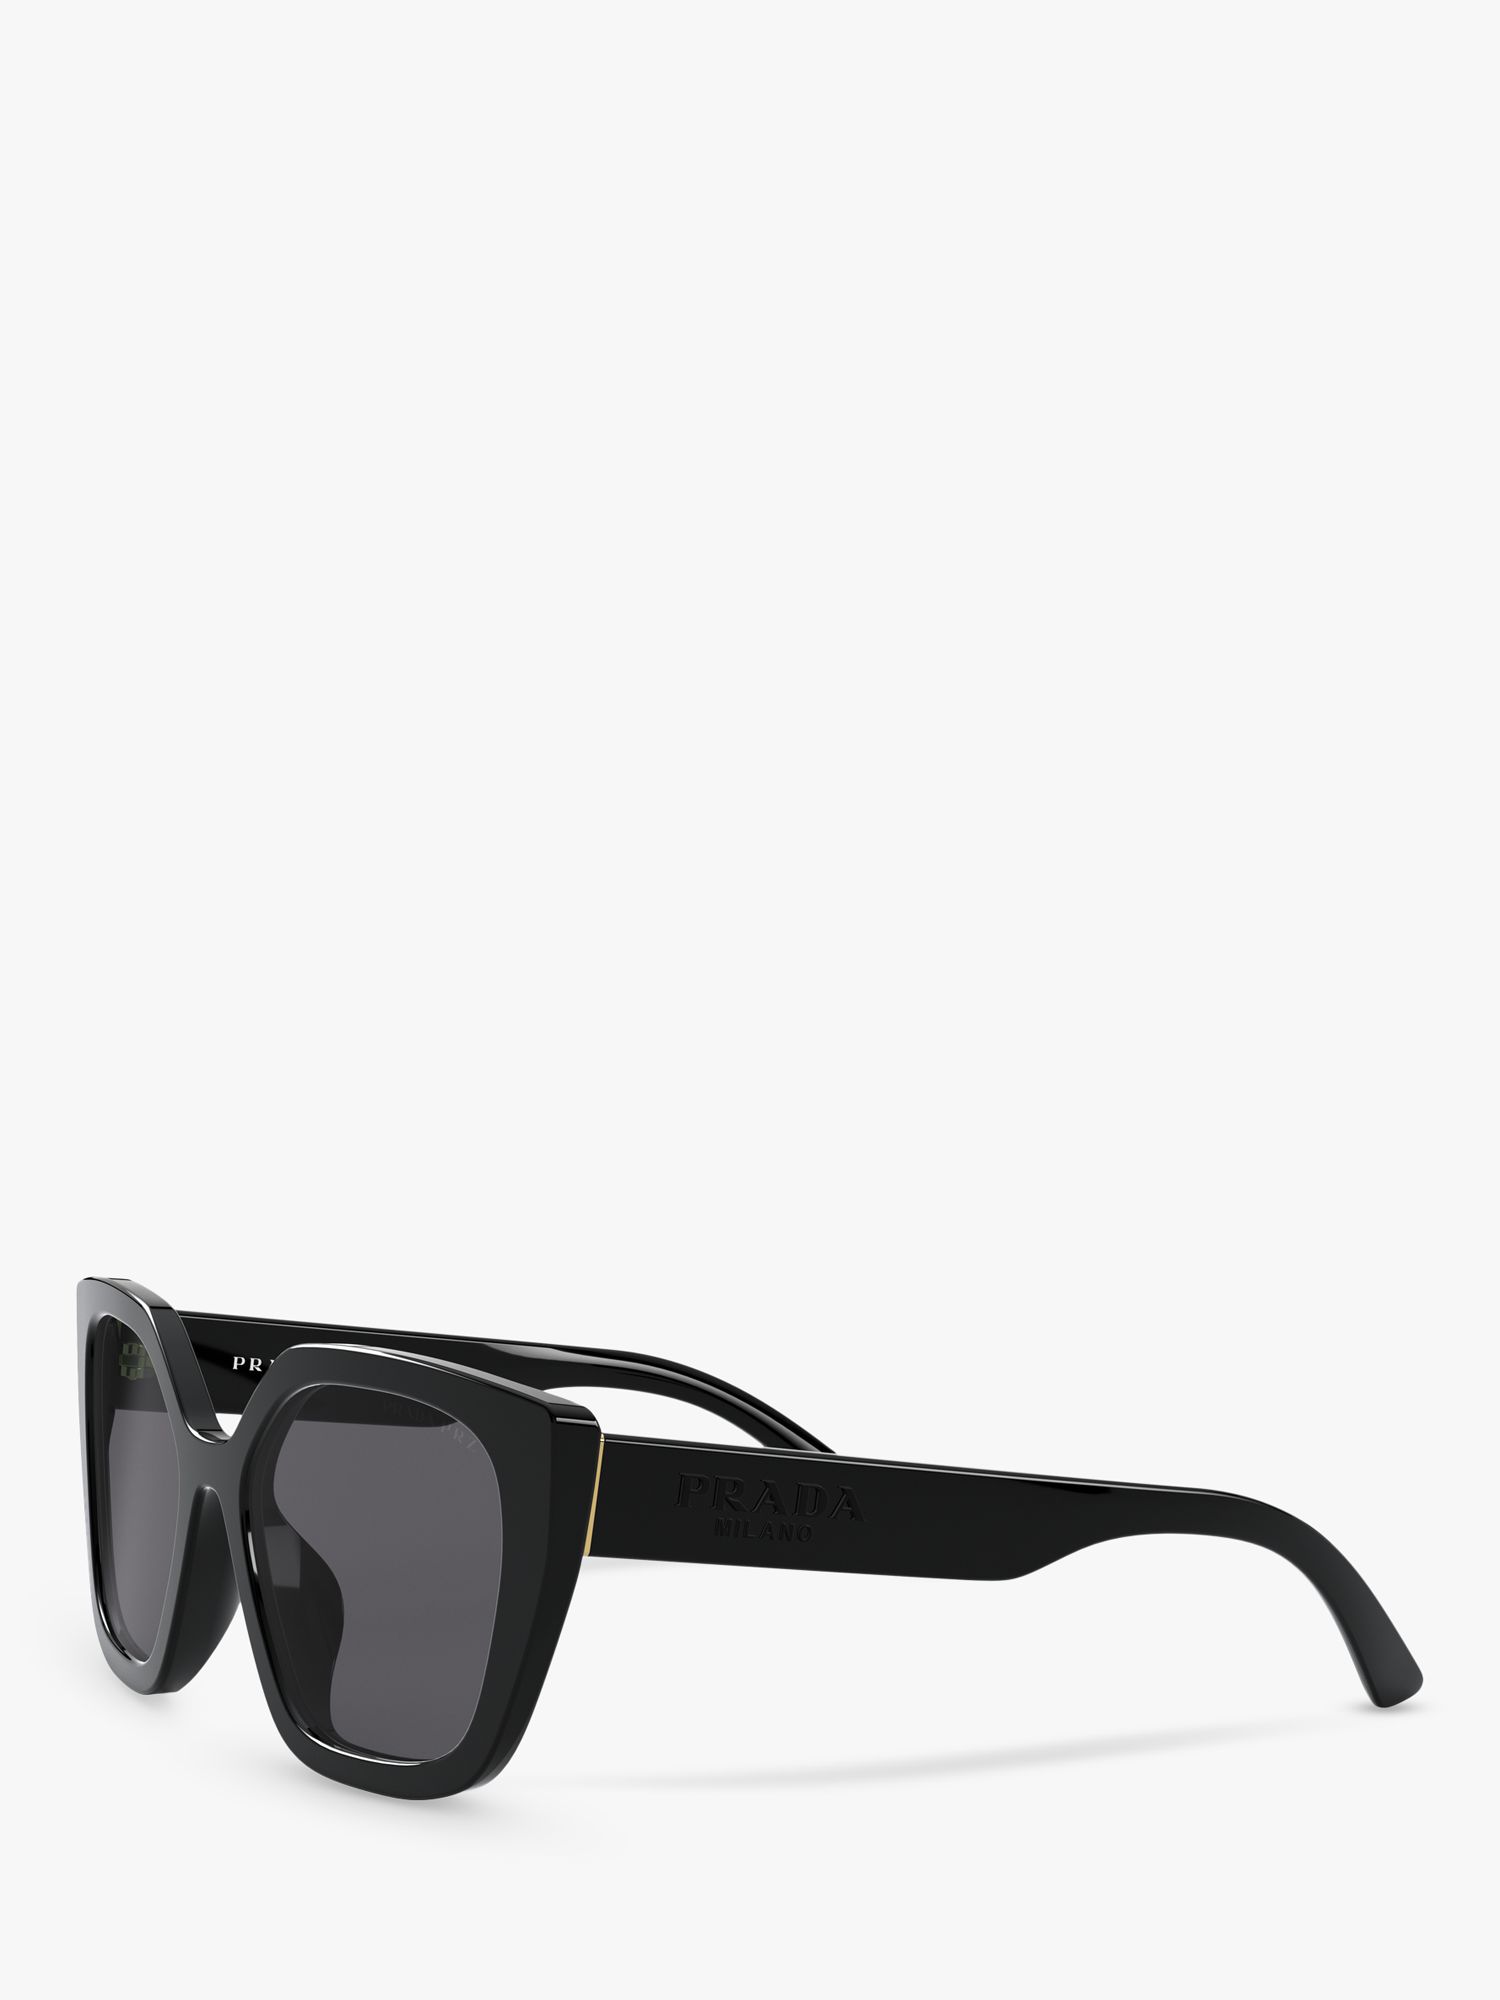 Prada PR 24XS Women's Polarised Square Sunglasses, Black/Grey at John ...